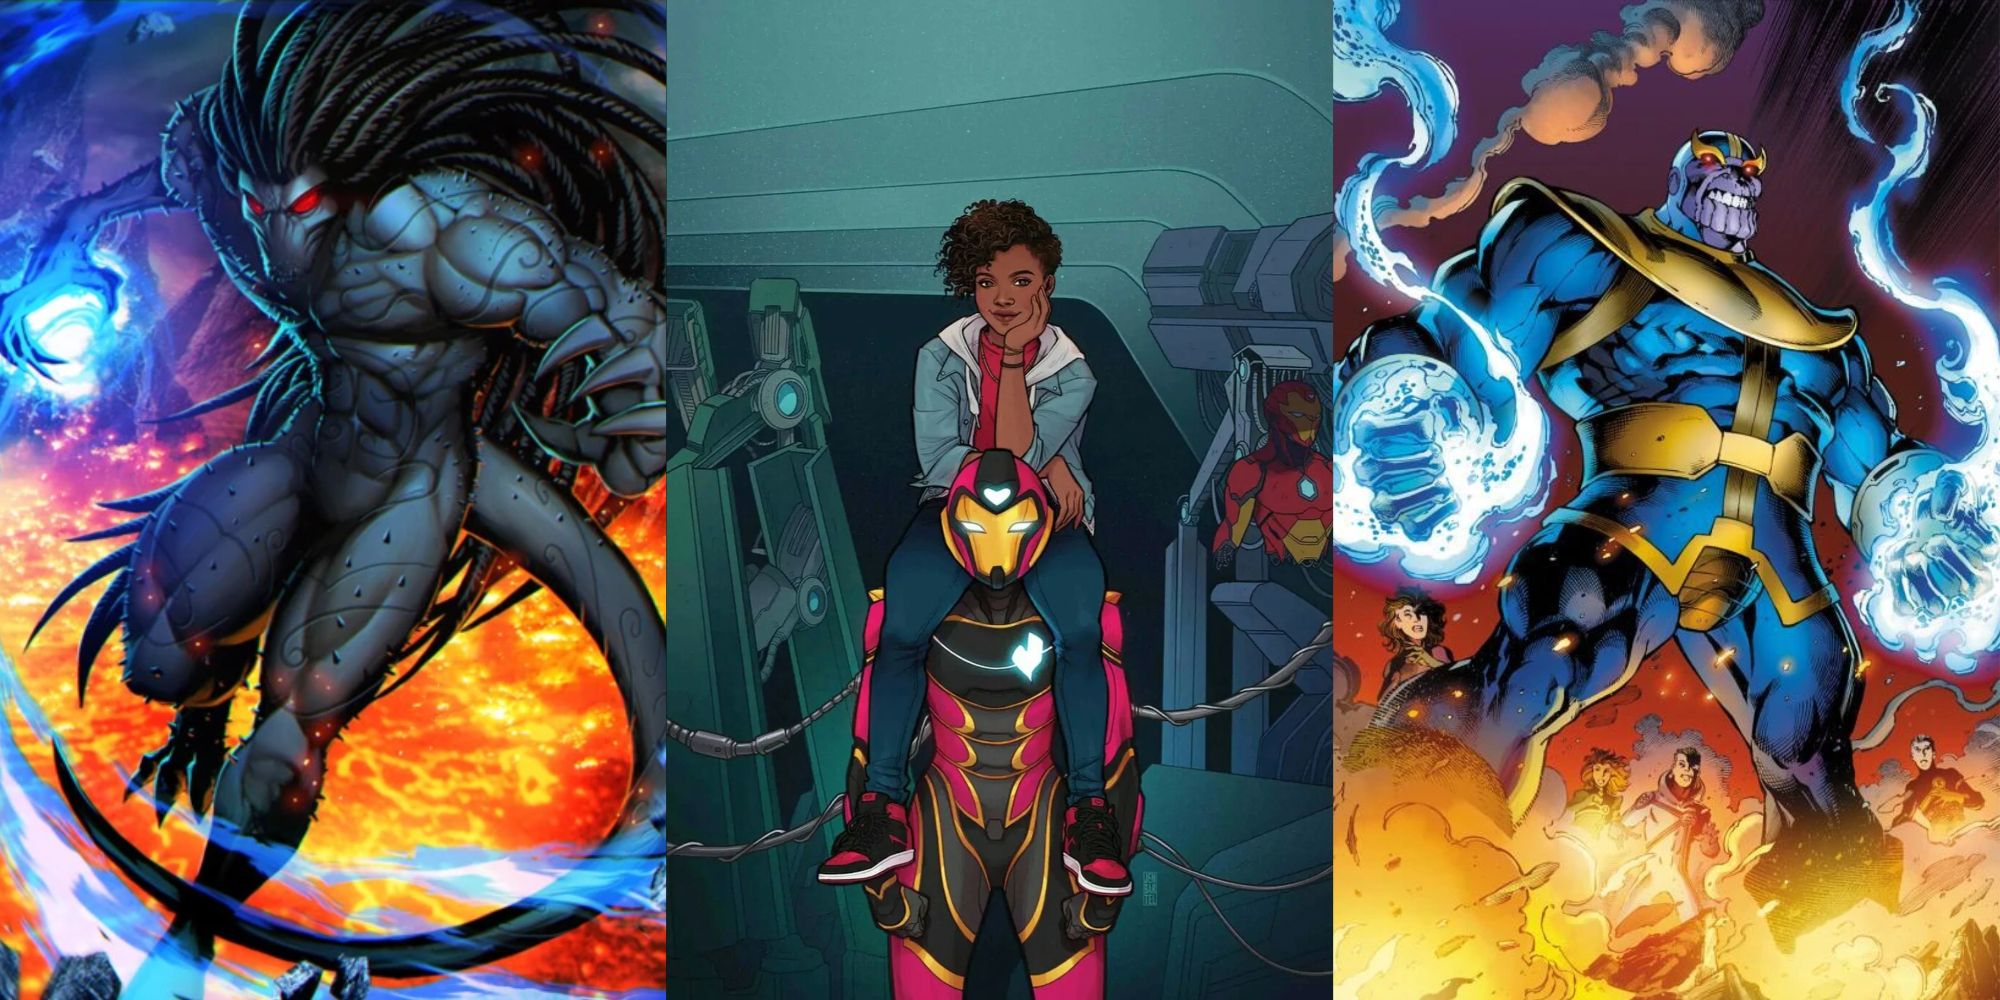 Split image of Blackheart, Ironheart, and Thanos from Marvel Comics.